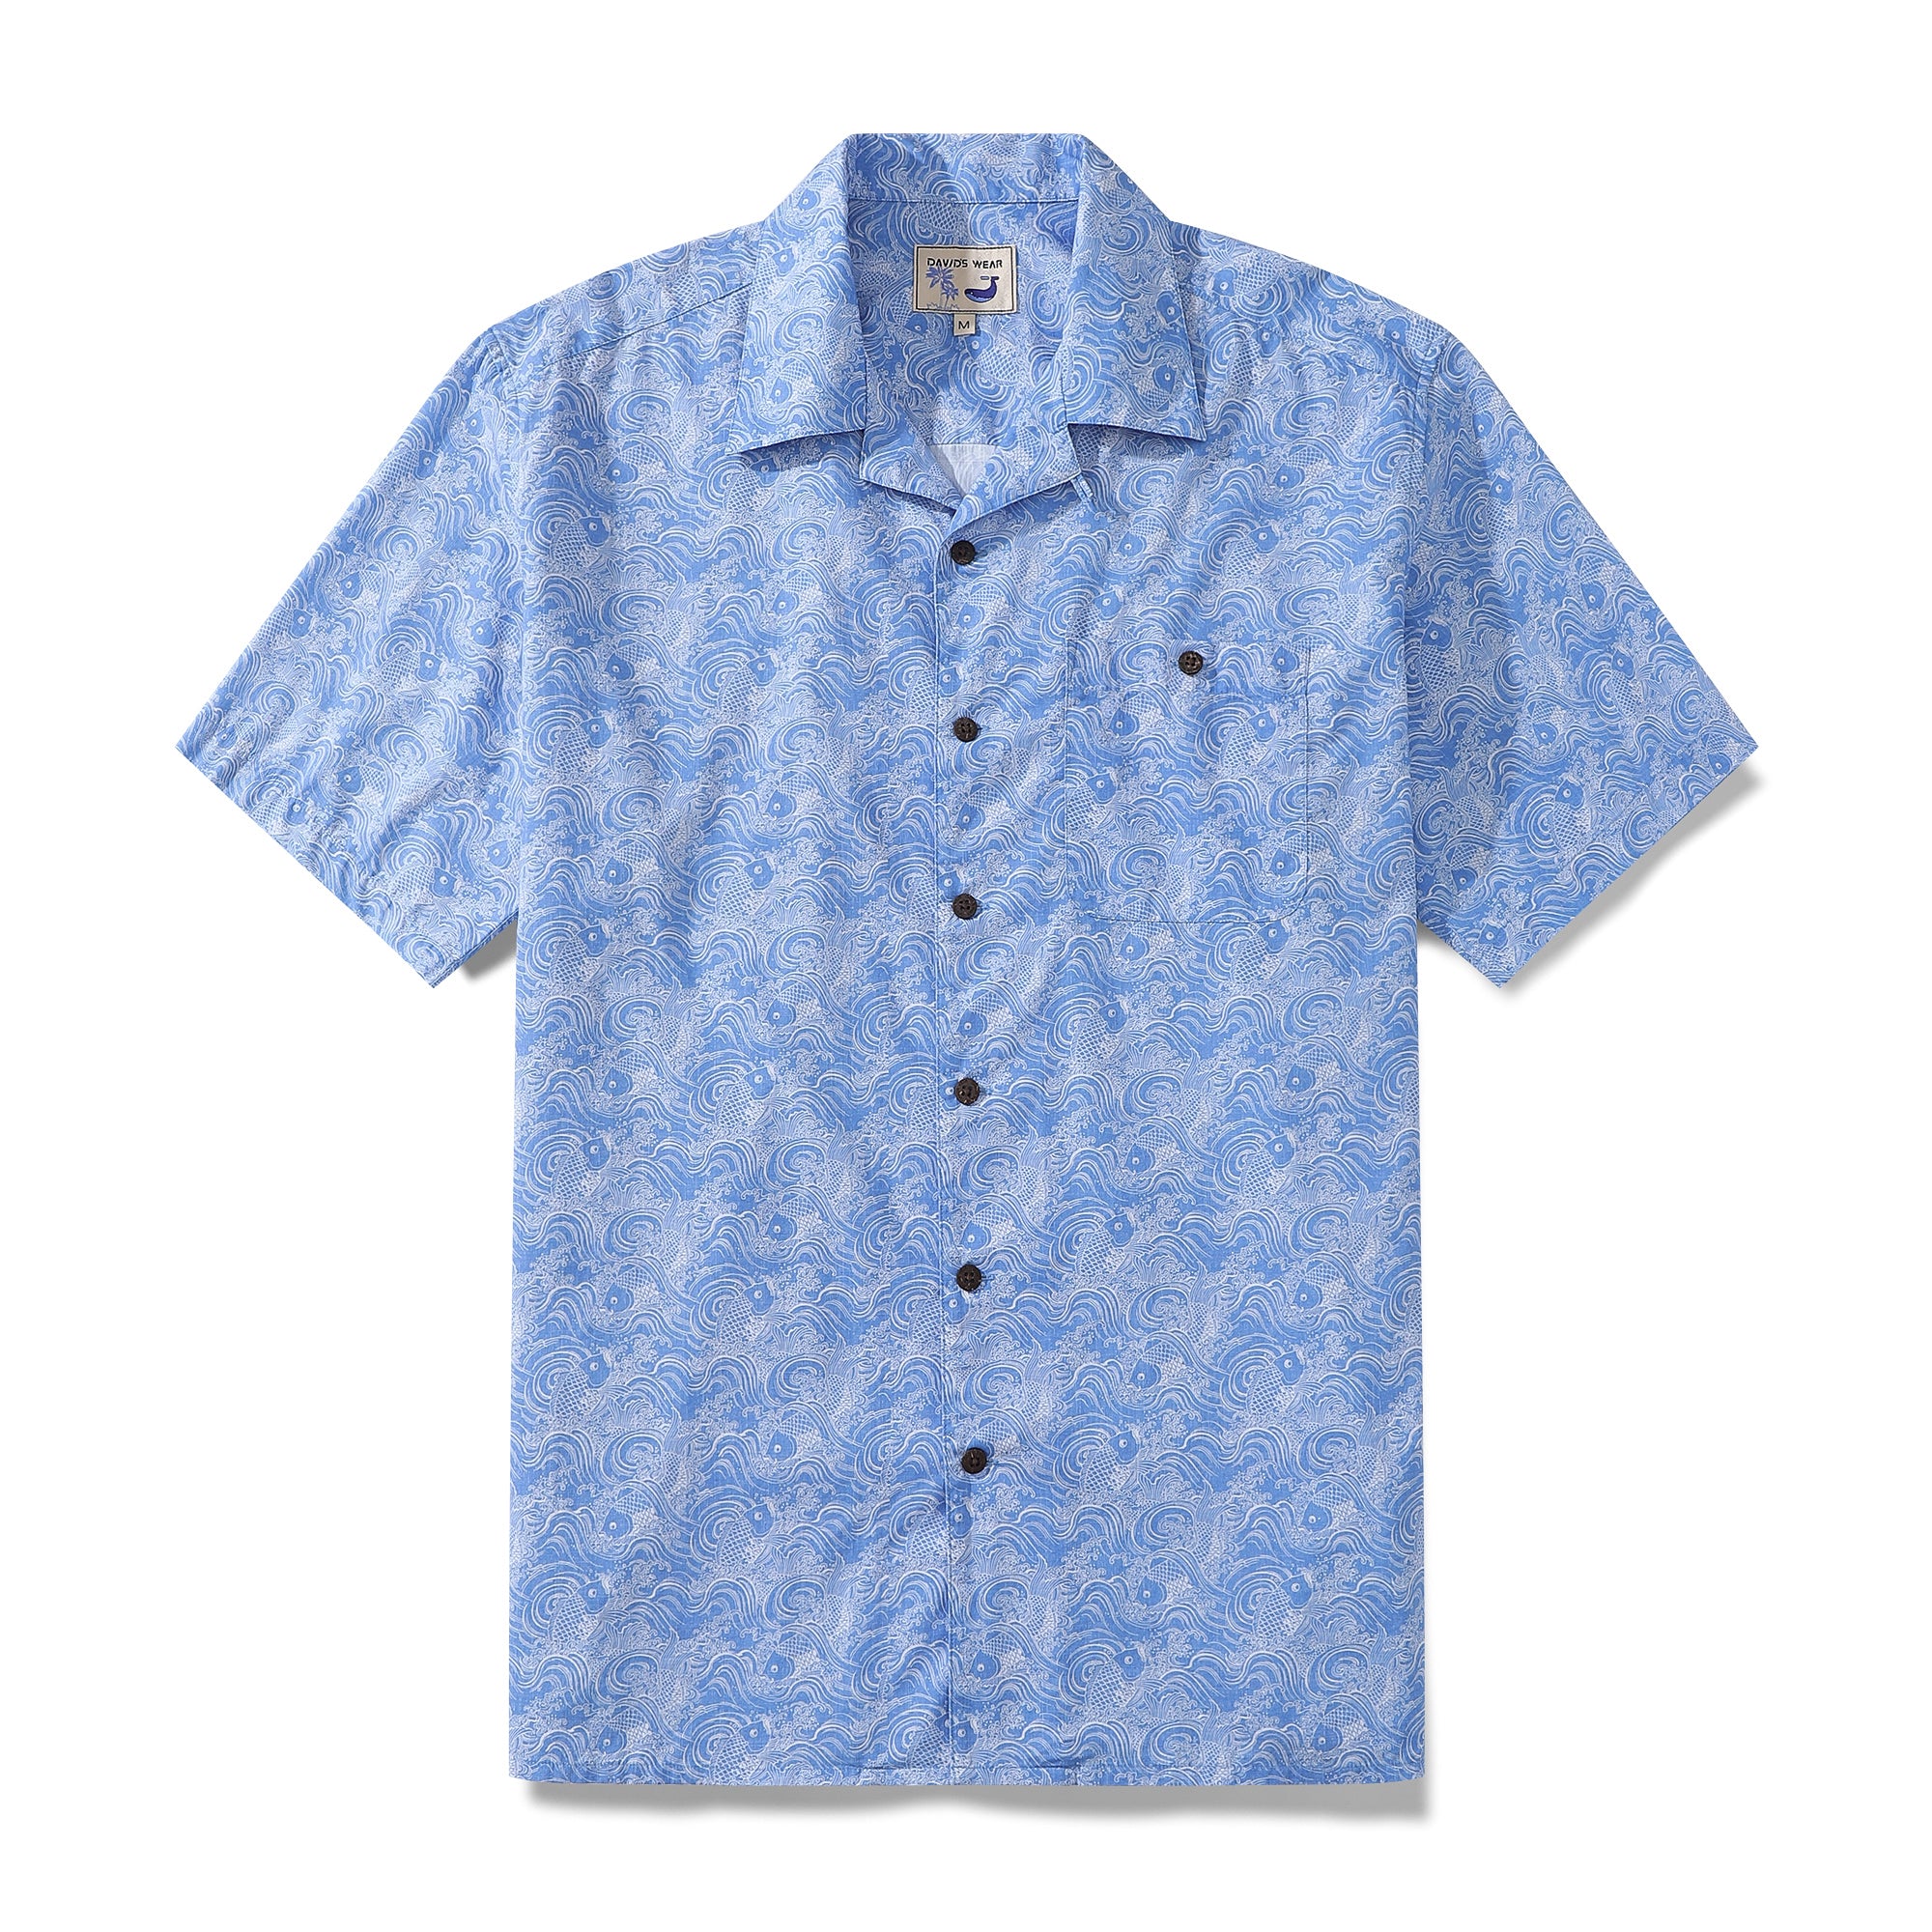 Hawaiian Shirts For Men Traditional Koi Carp Printed 100% Cotton Short ...